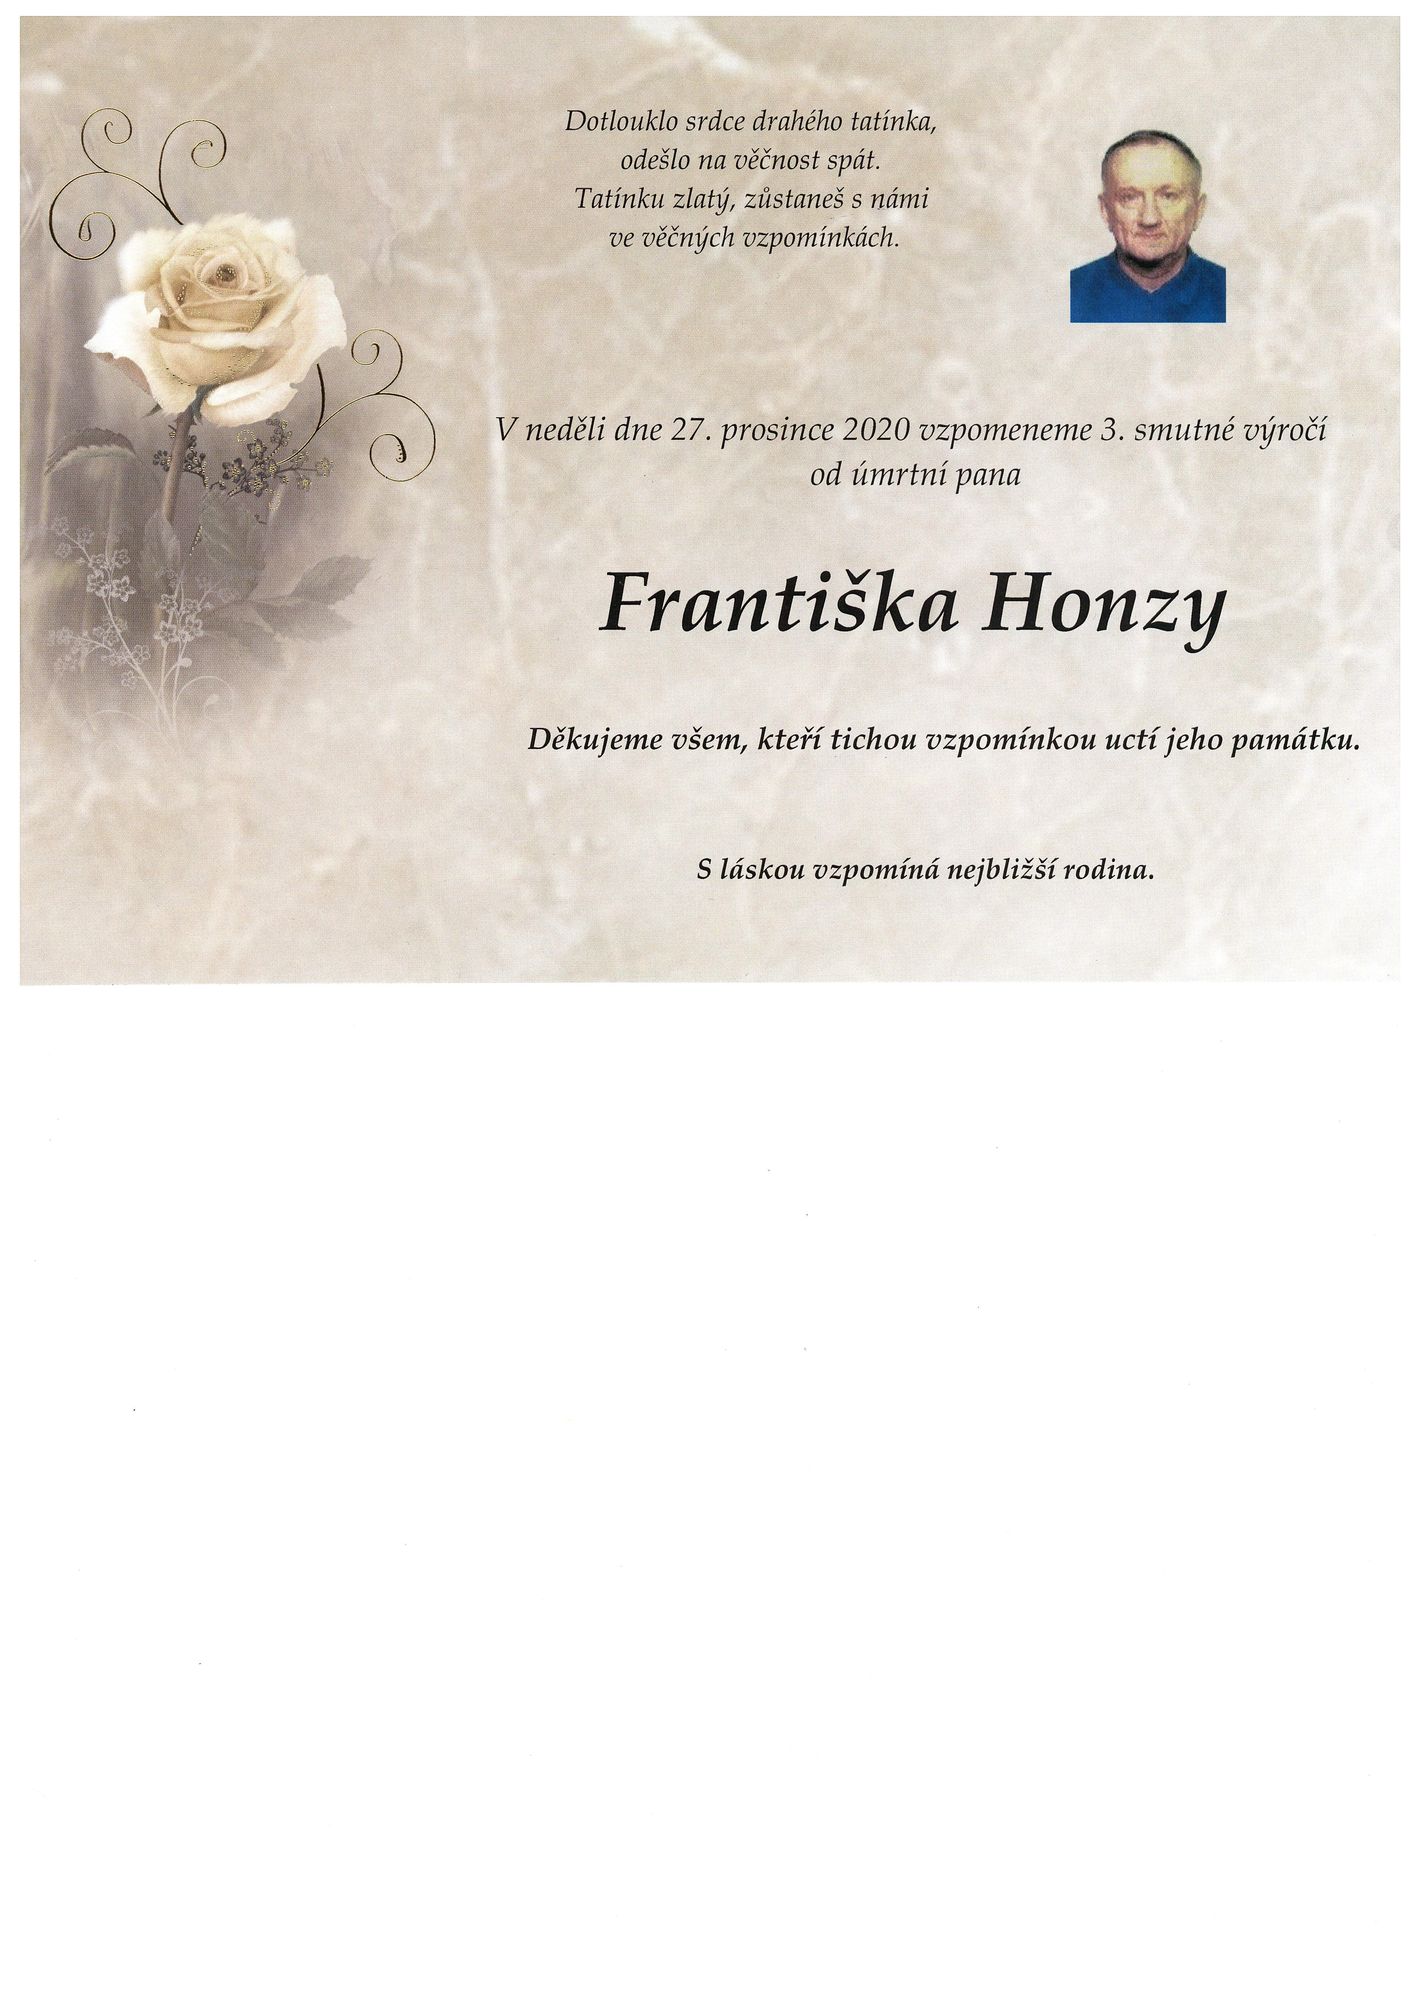 František Honza